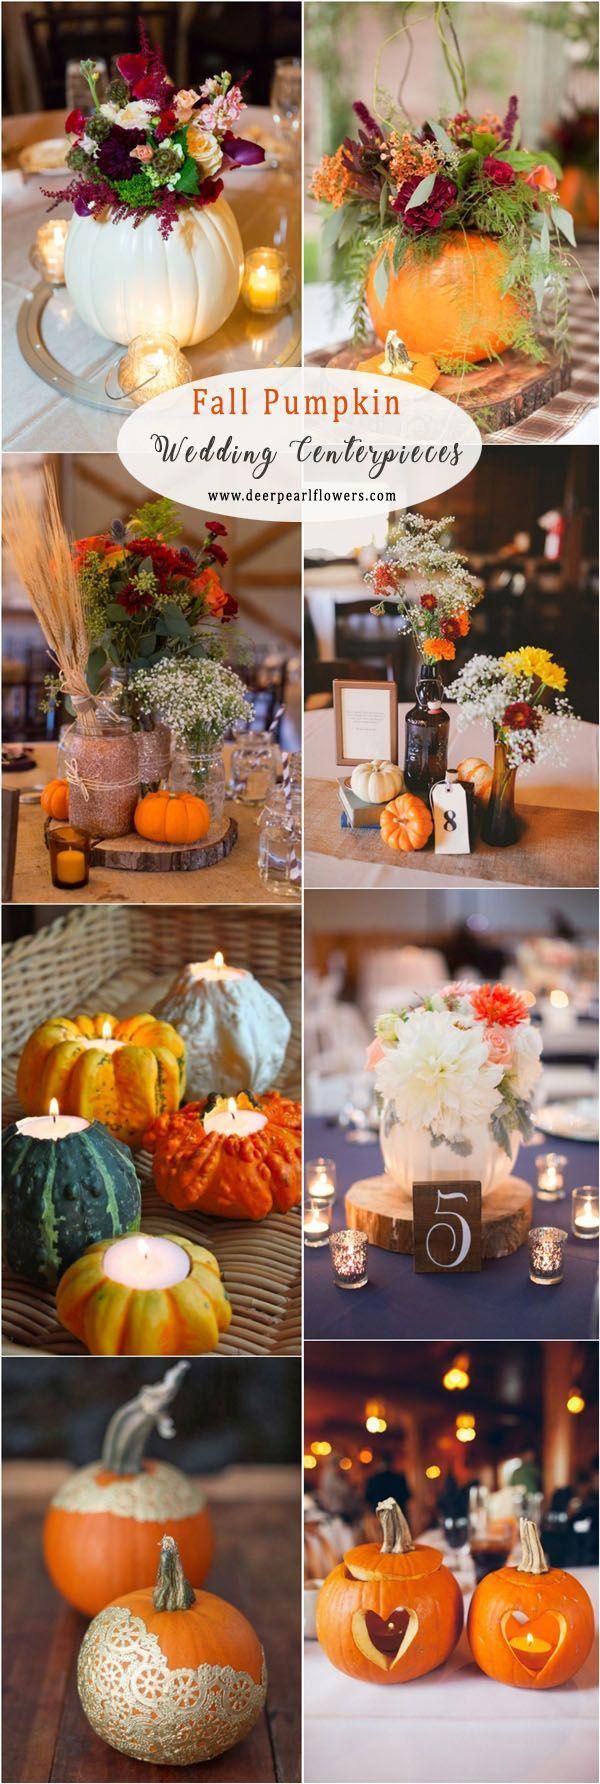 45 Fall & Autumn Wedding Centerpieces Ideas -   15 wedding Fall diy ideas